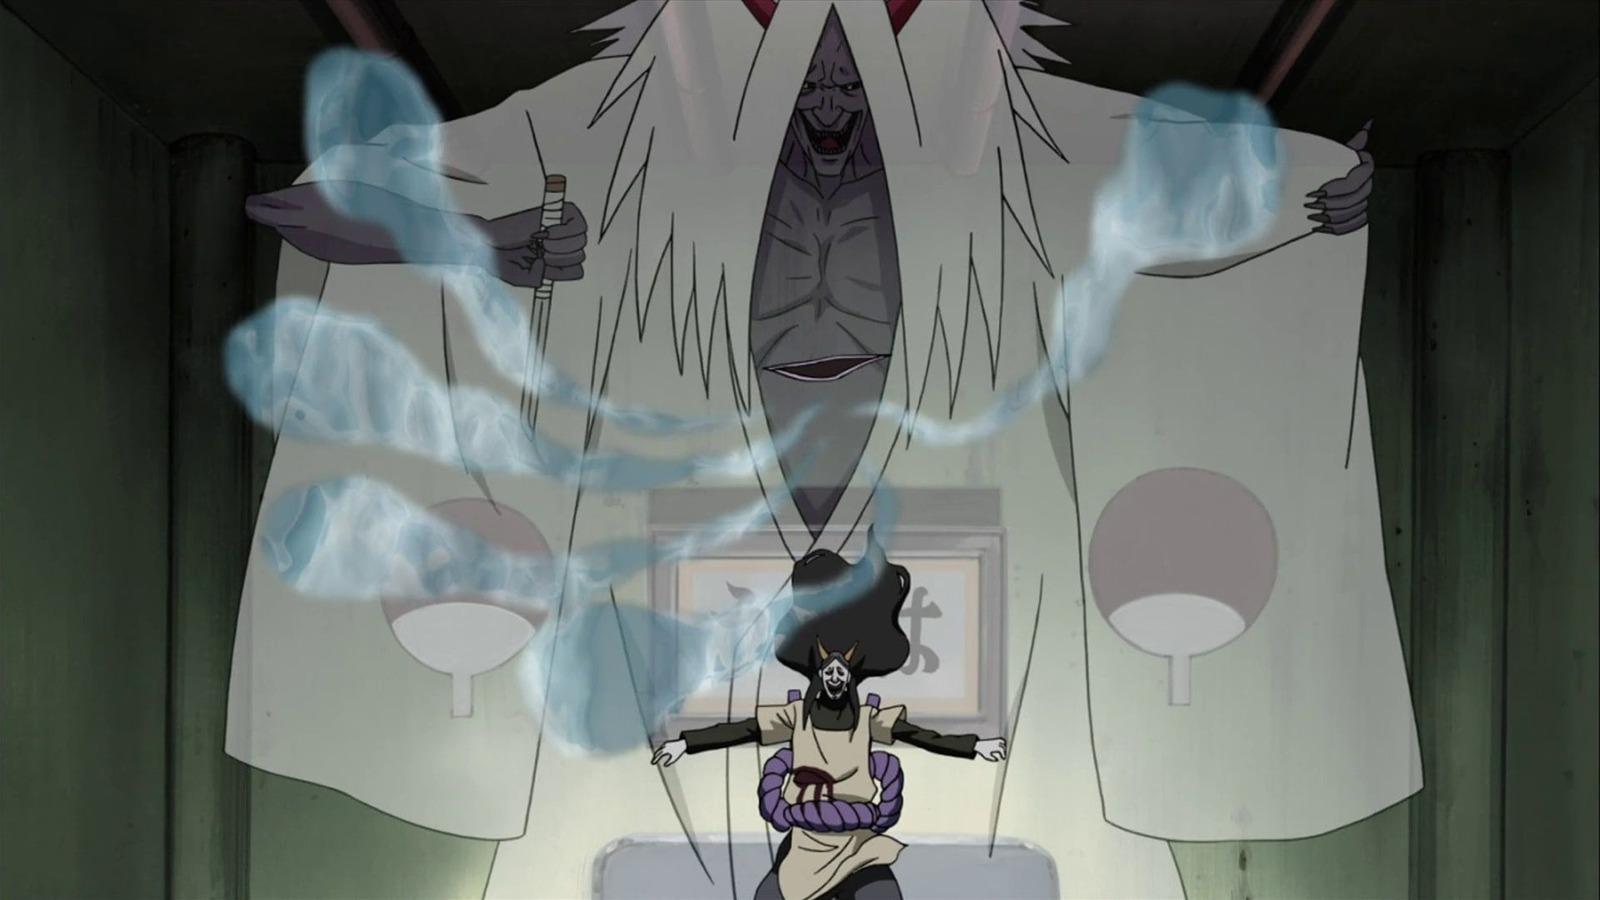 An image of Orochimaru using Forbidden Jutsu in Naruto